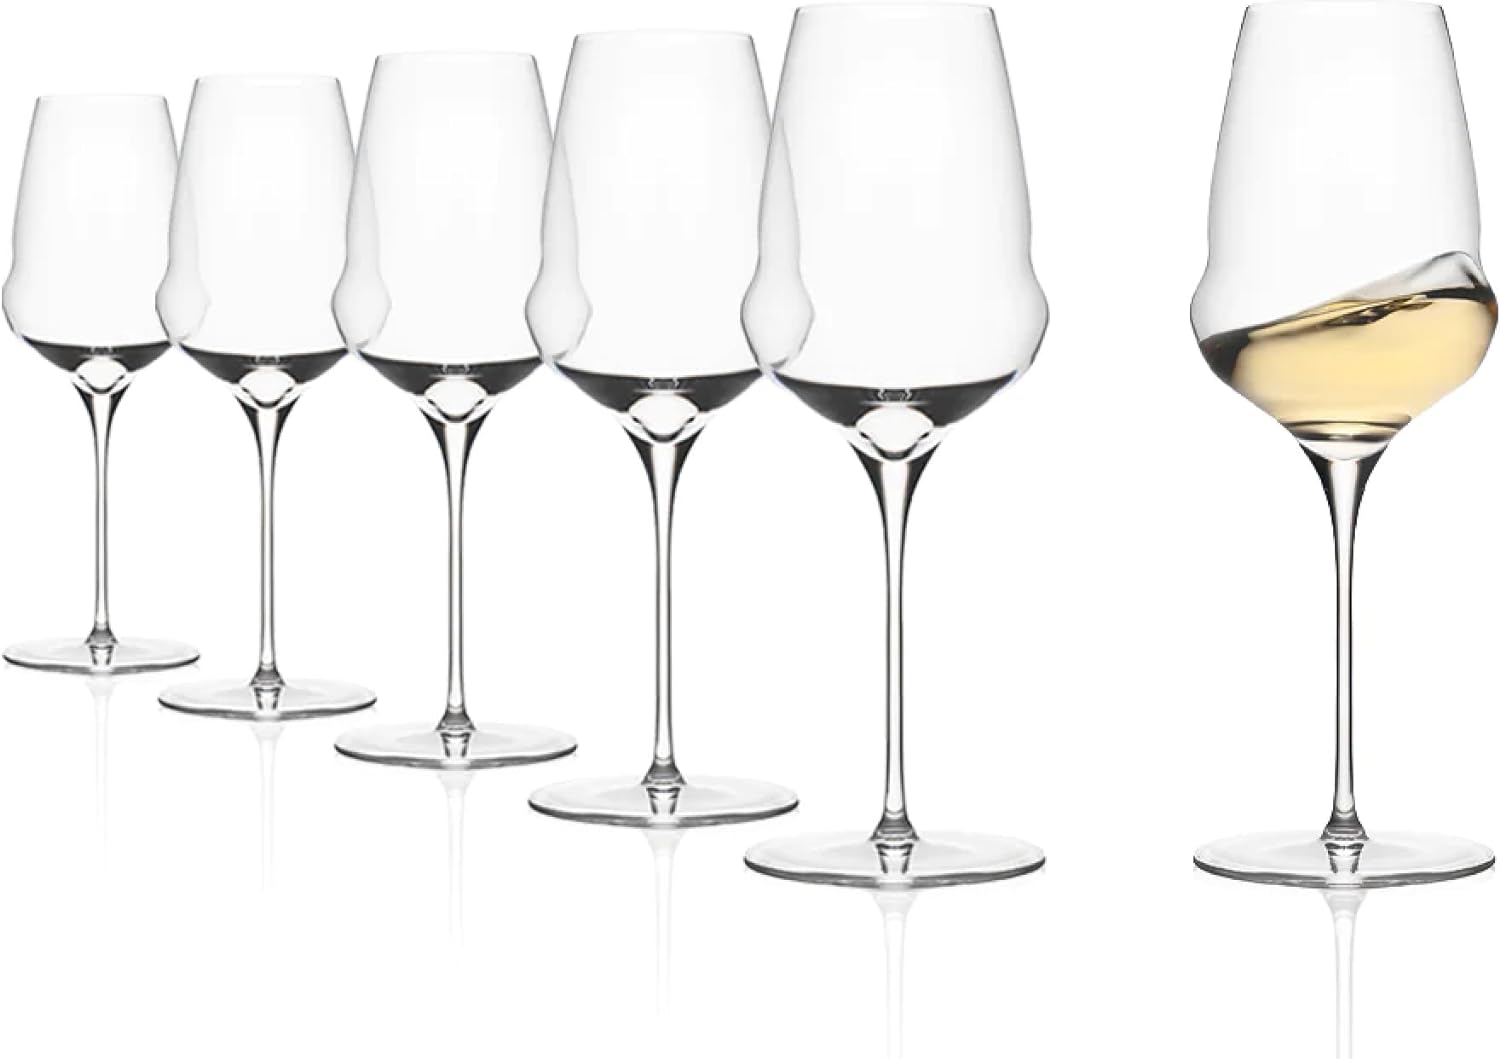 Stölzle Lausitz White Wine Glasses Cocoon/White Wine Glasses Set of 6/Wine Glasses Crystal Glass/Elegant White Wine Glass Extravagant/High-Quality Wine Glass Set/Wine Glasses Stölzle